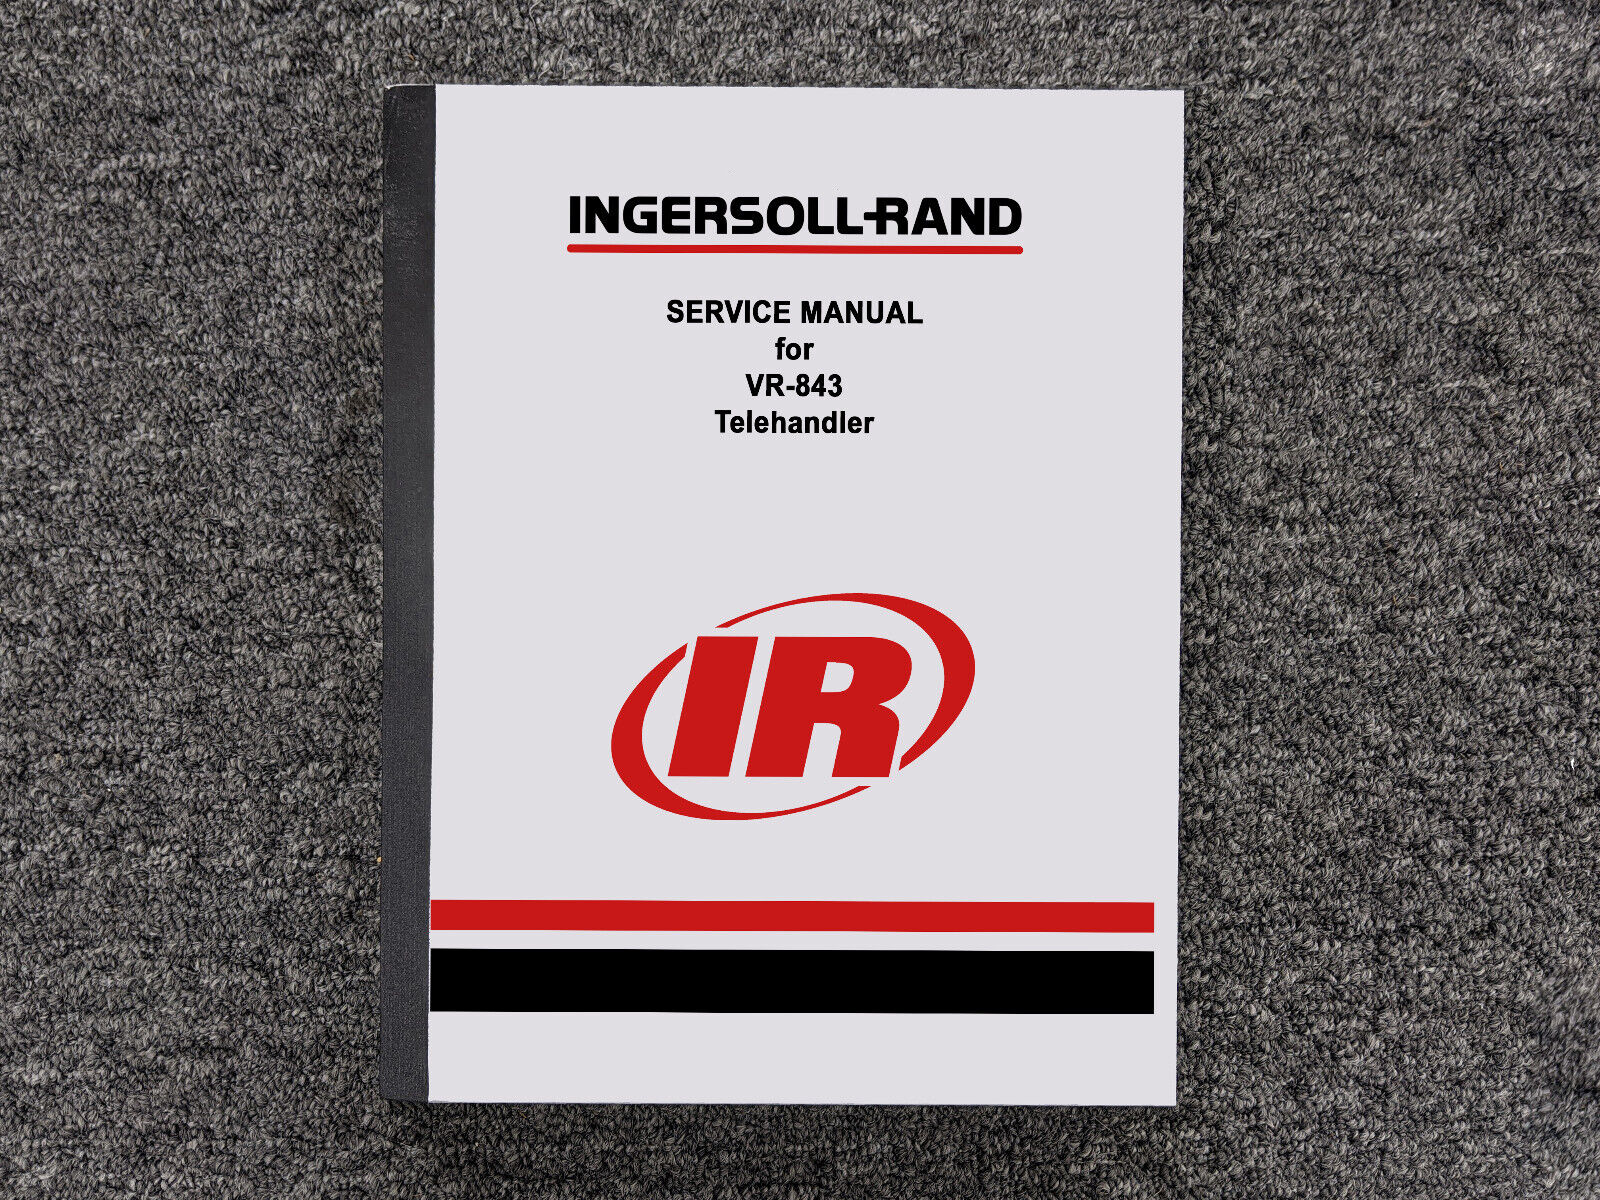 Ingersoll-Rand Telehandler VR-843 Repair Service Shop Manual